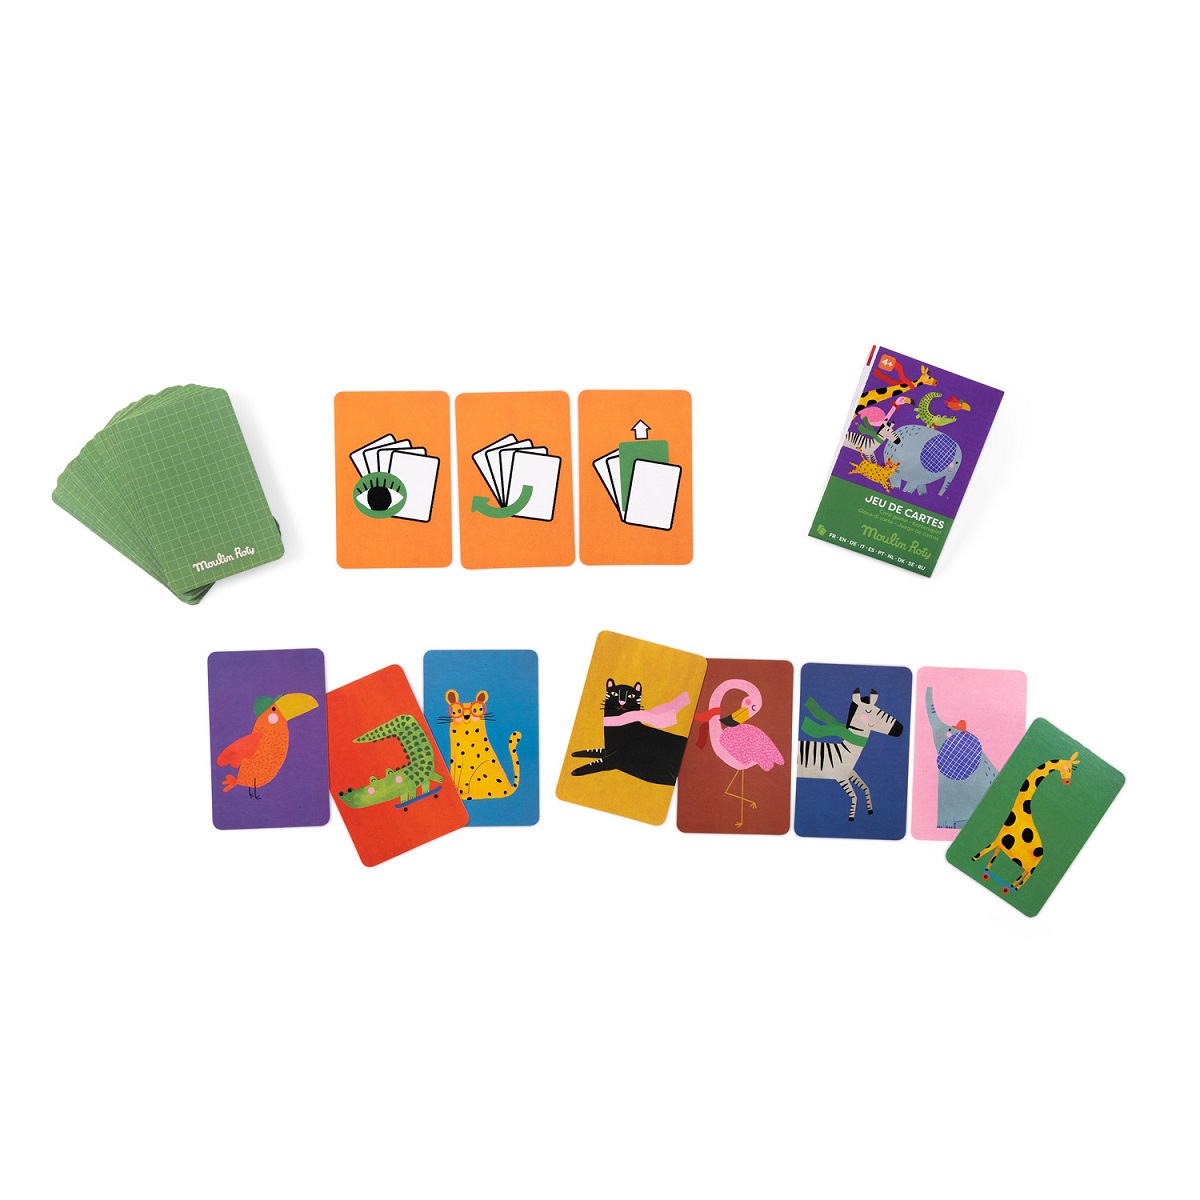 Les Toupitis - Card Game